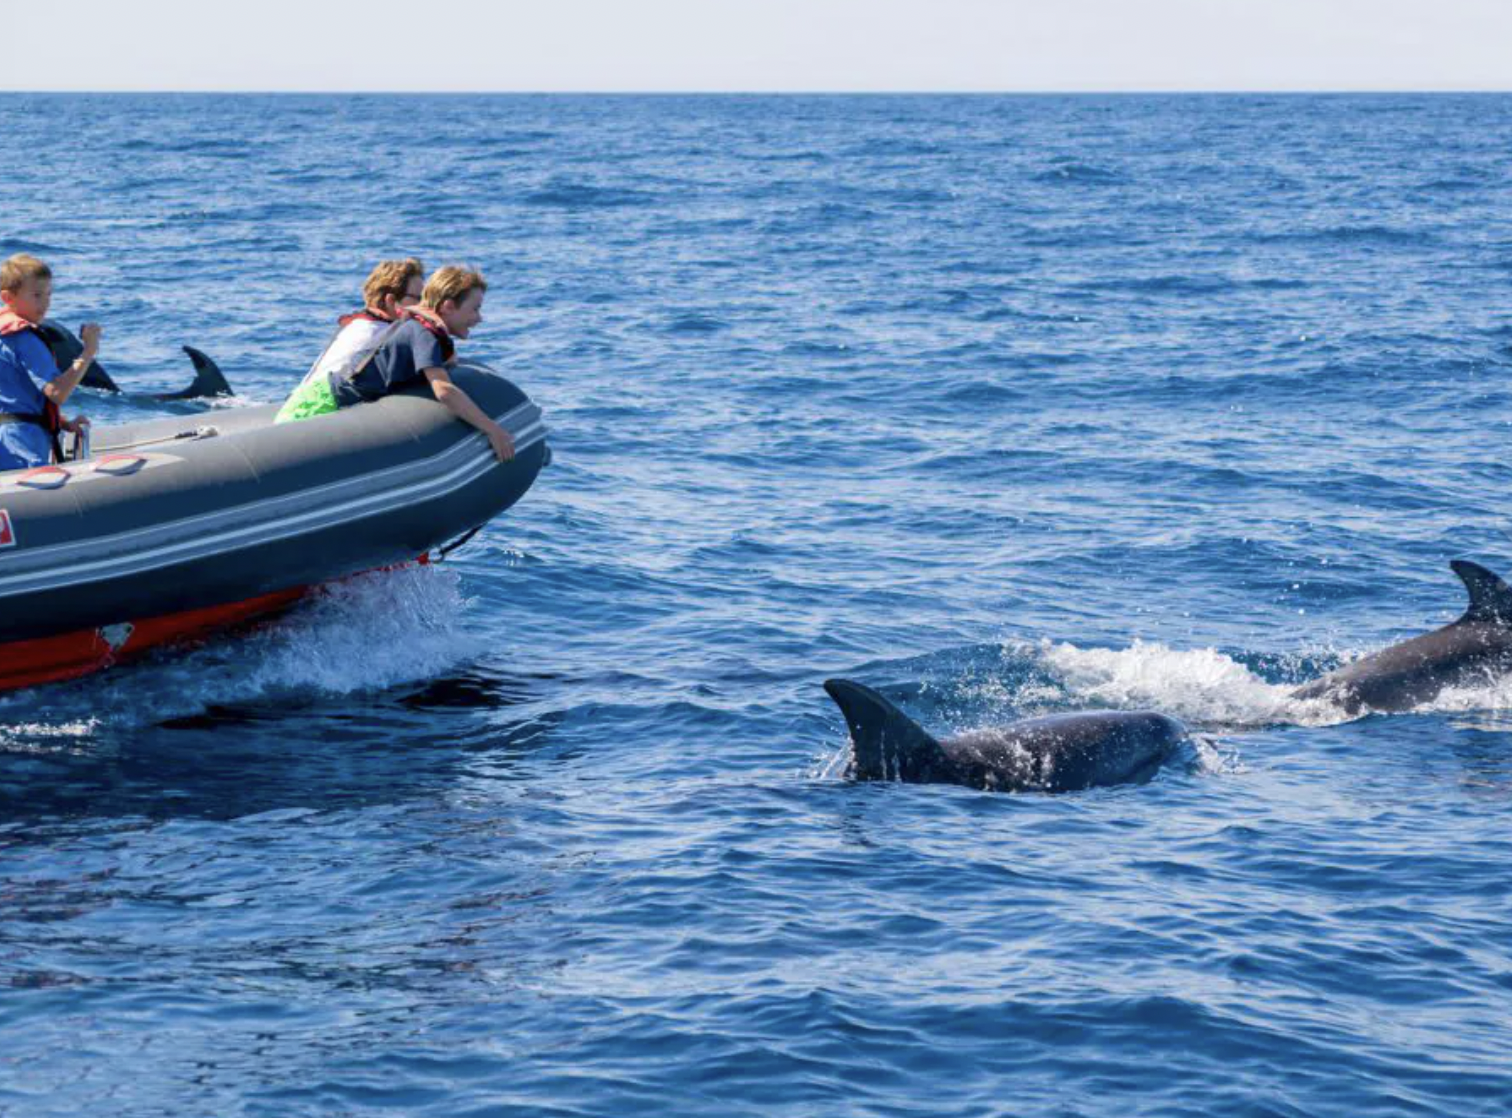 Benagil & Dolphin on a RIB Boat from Albufeira